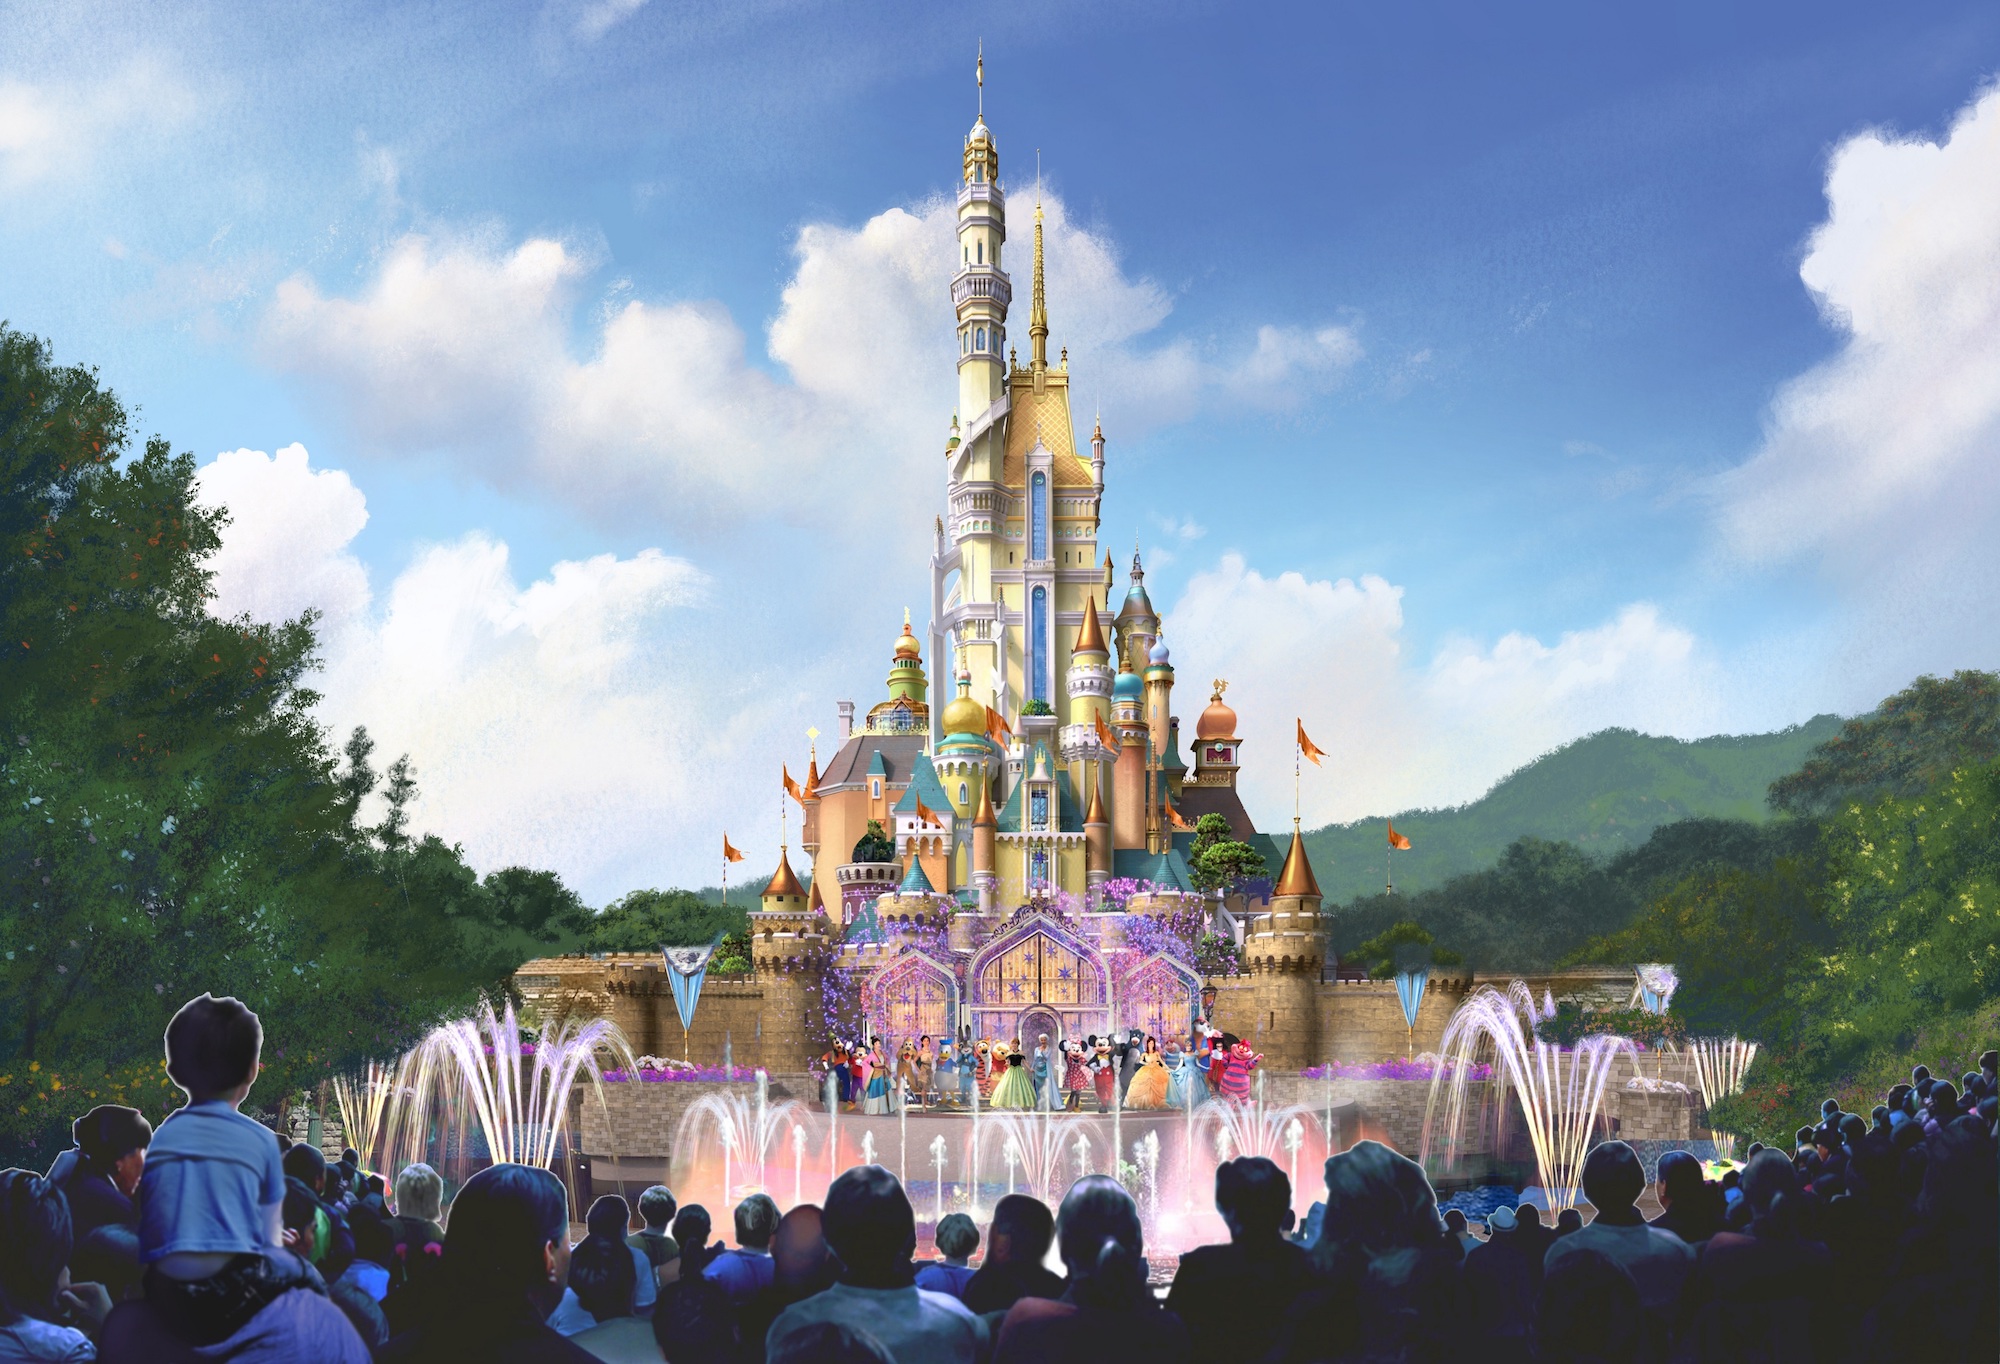 Hong Kong Disneyland’s Sleeping Beauty Castle Transformation